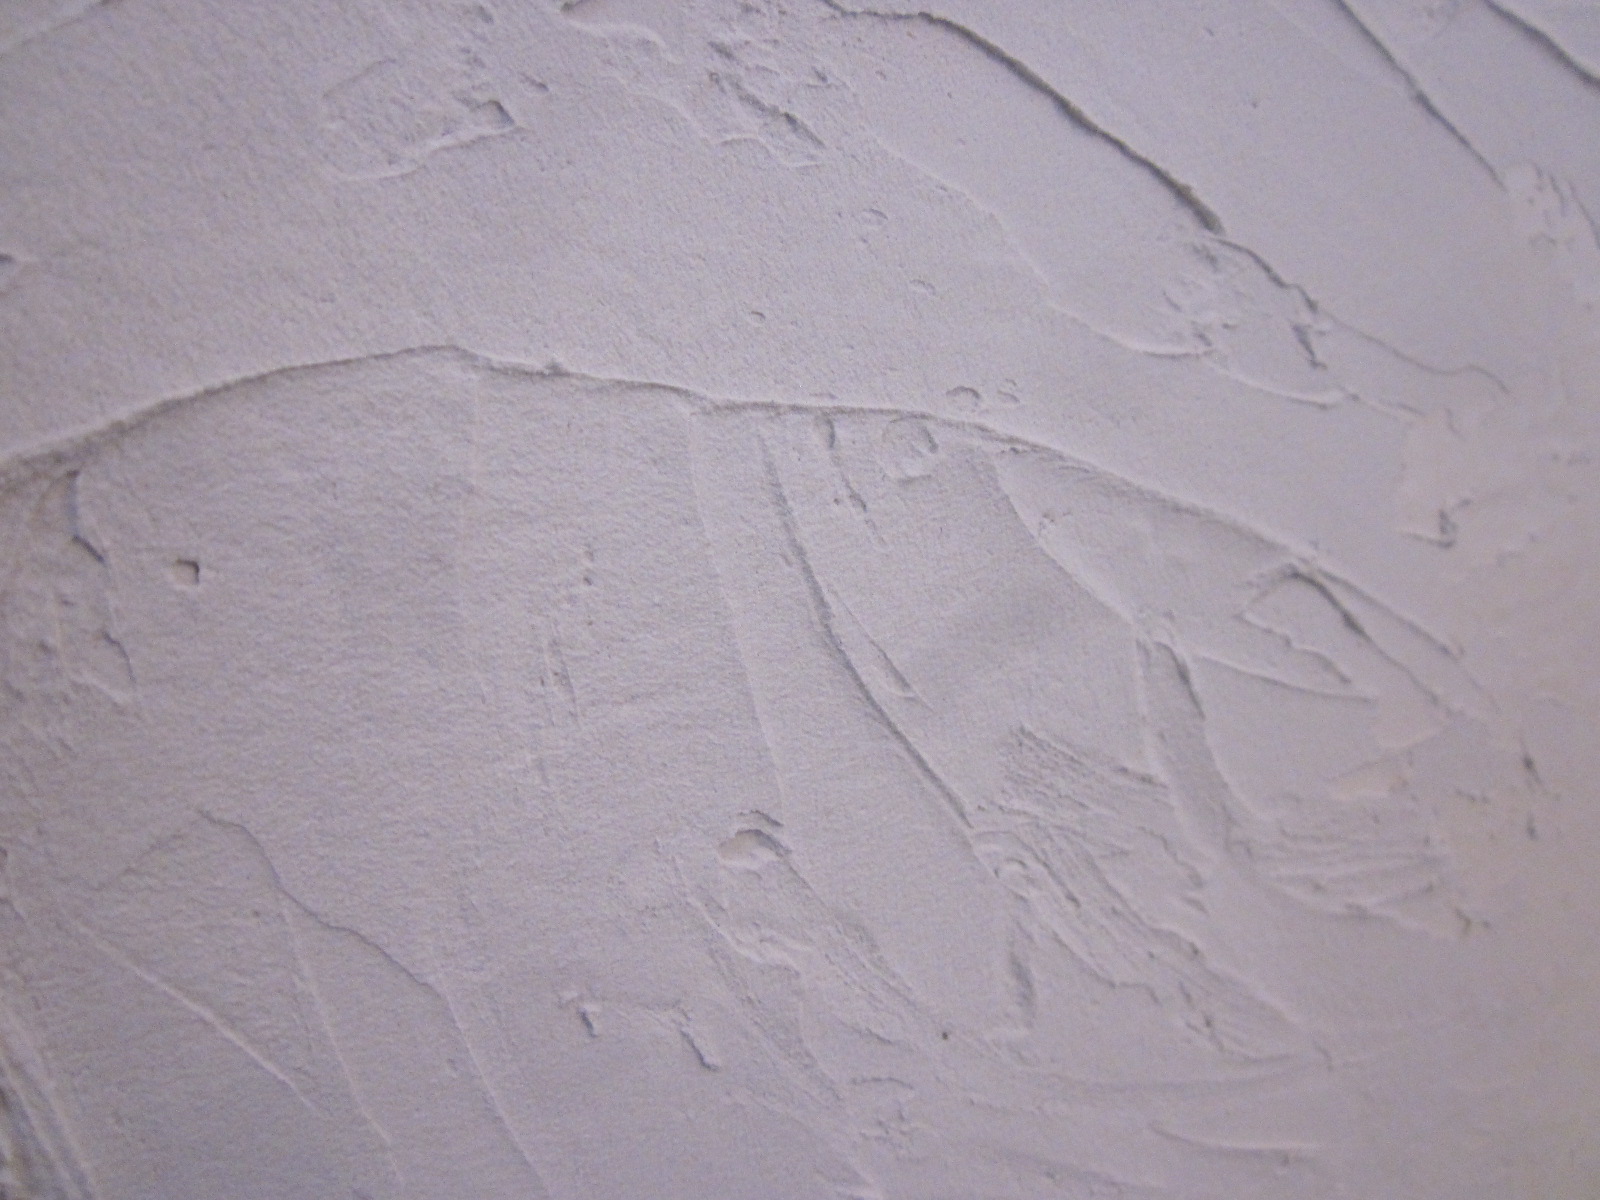 HendersonWorks: Plaster Repair on Old Walls, Matching and Refinishing